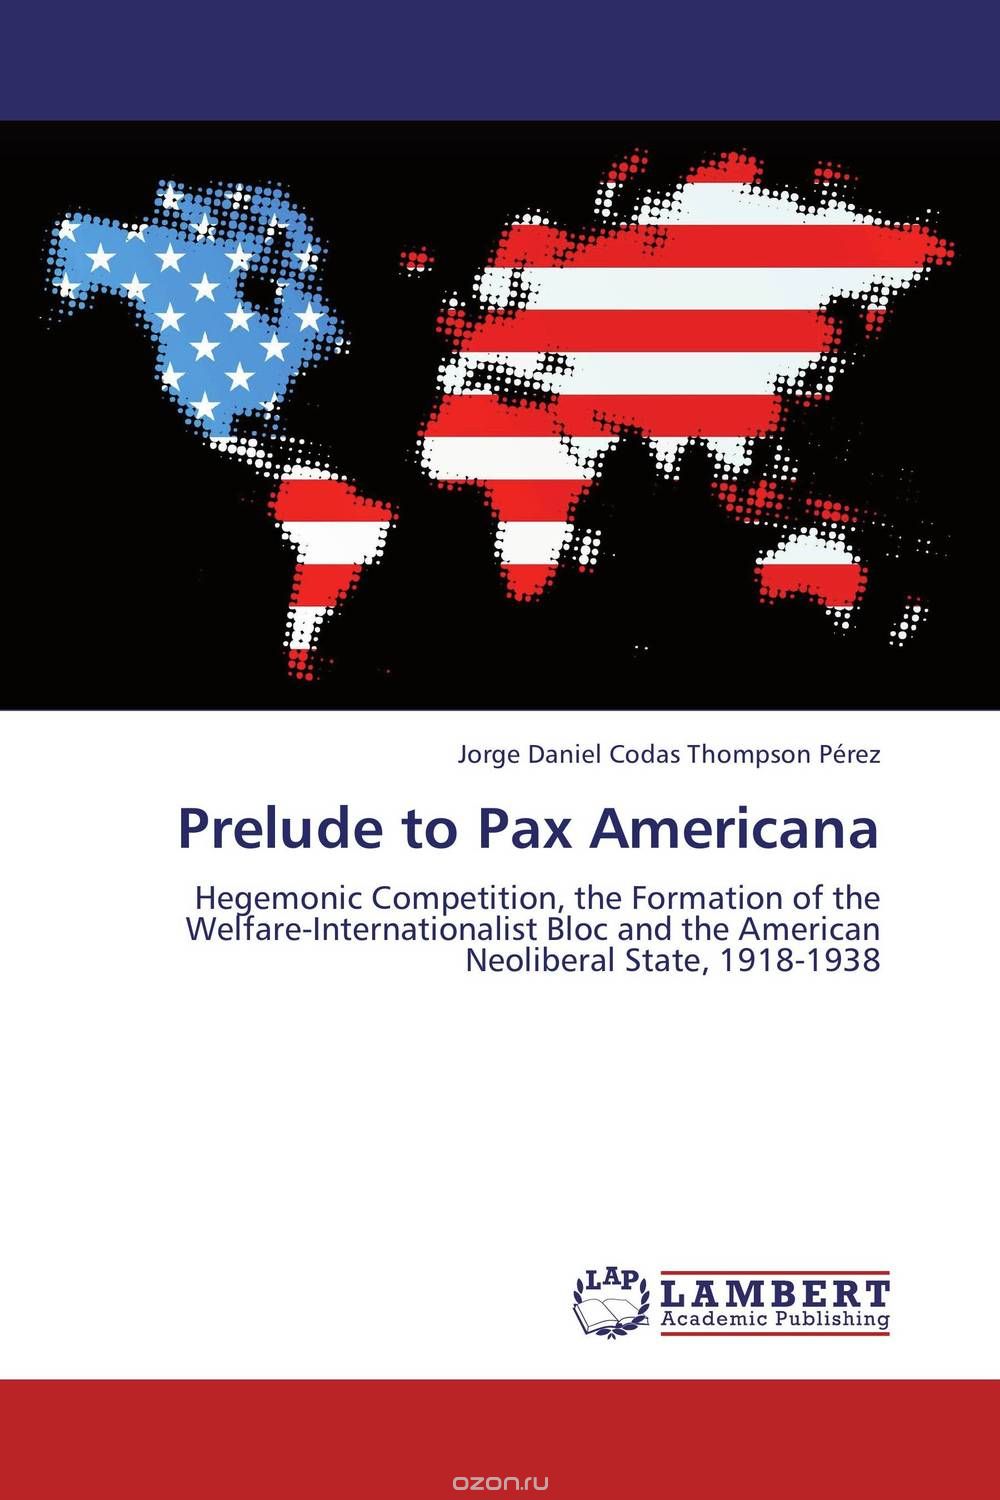 Скачать книгу "Prelude to Pax Americana"